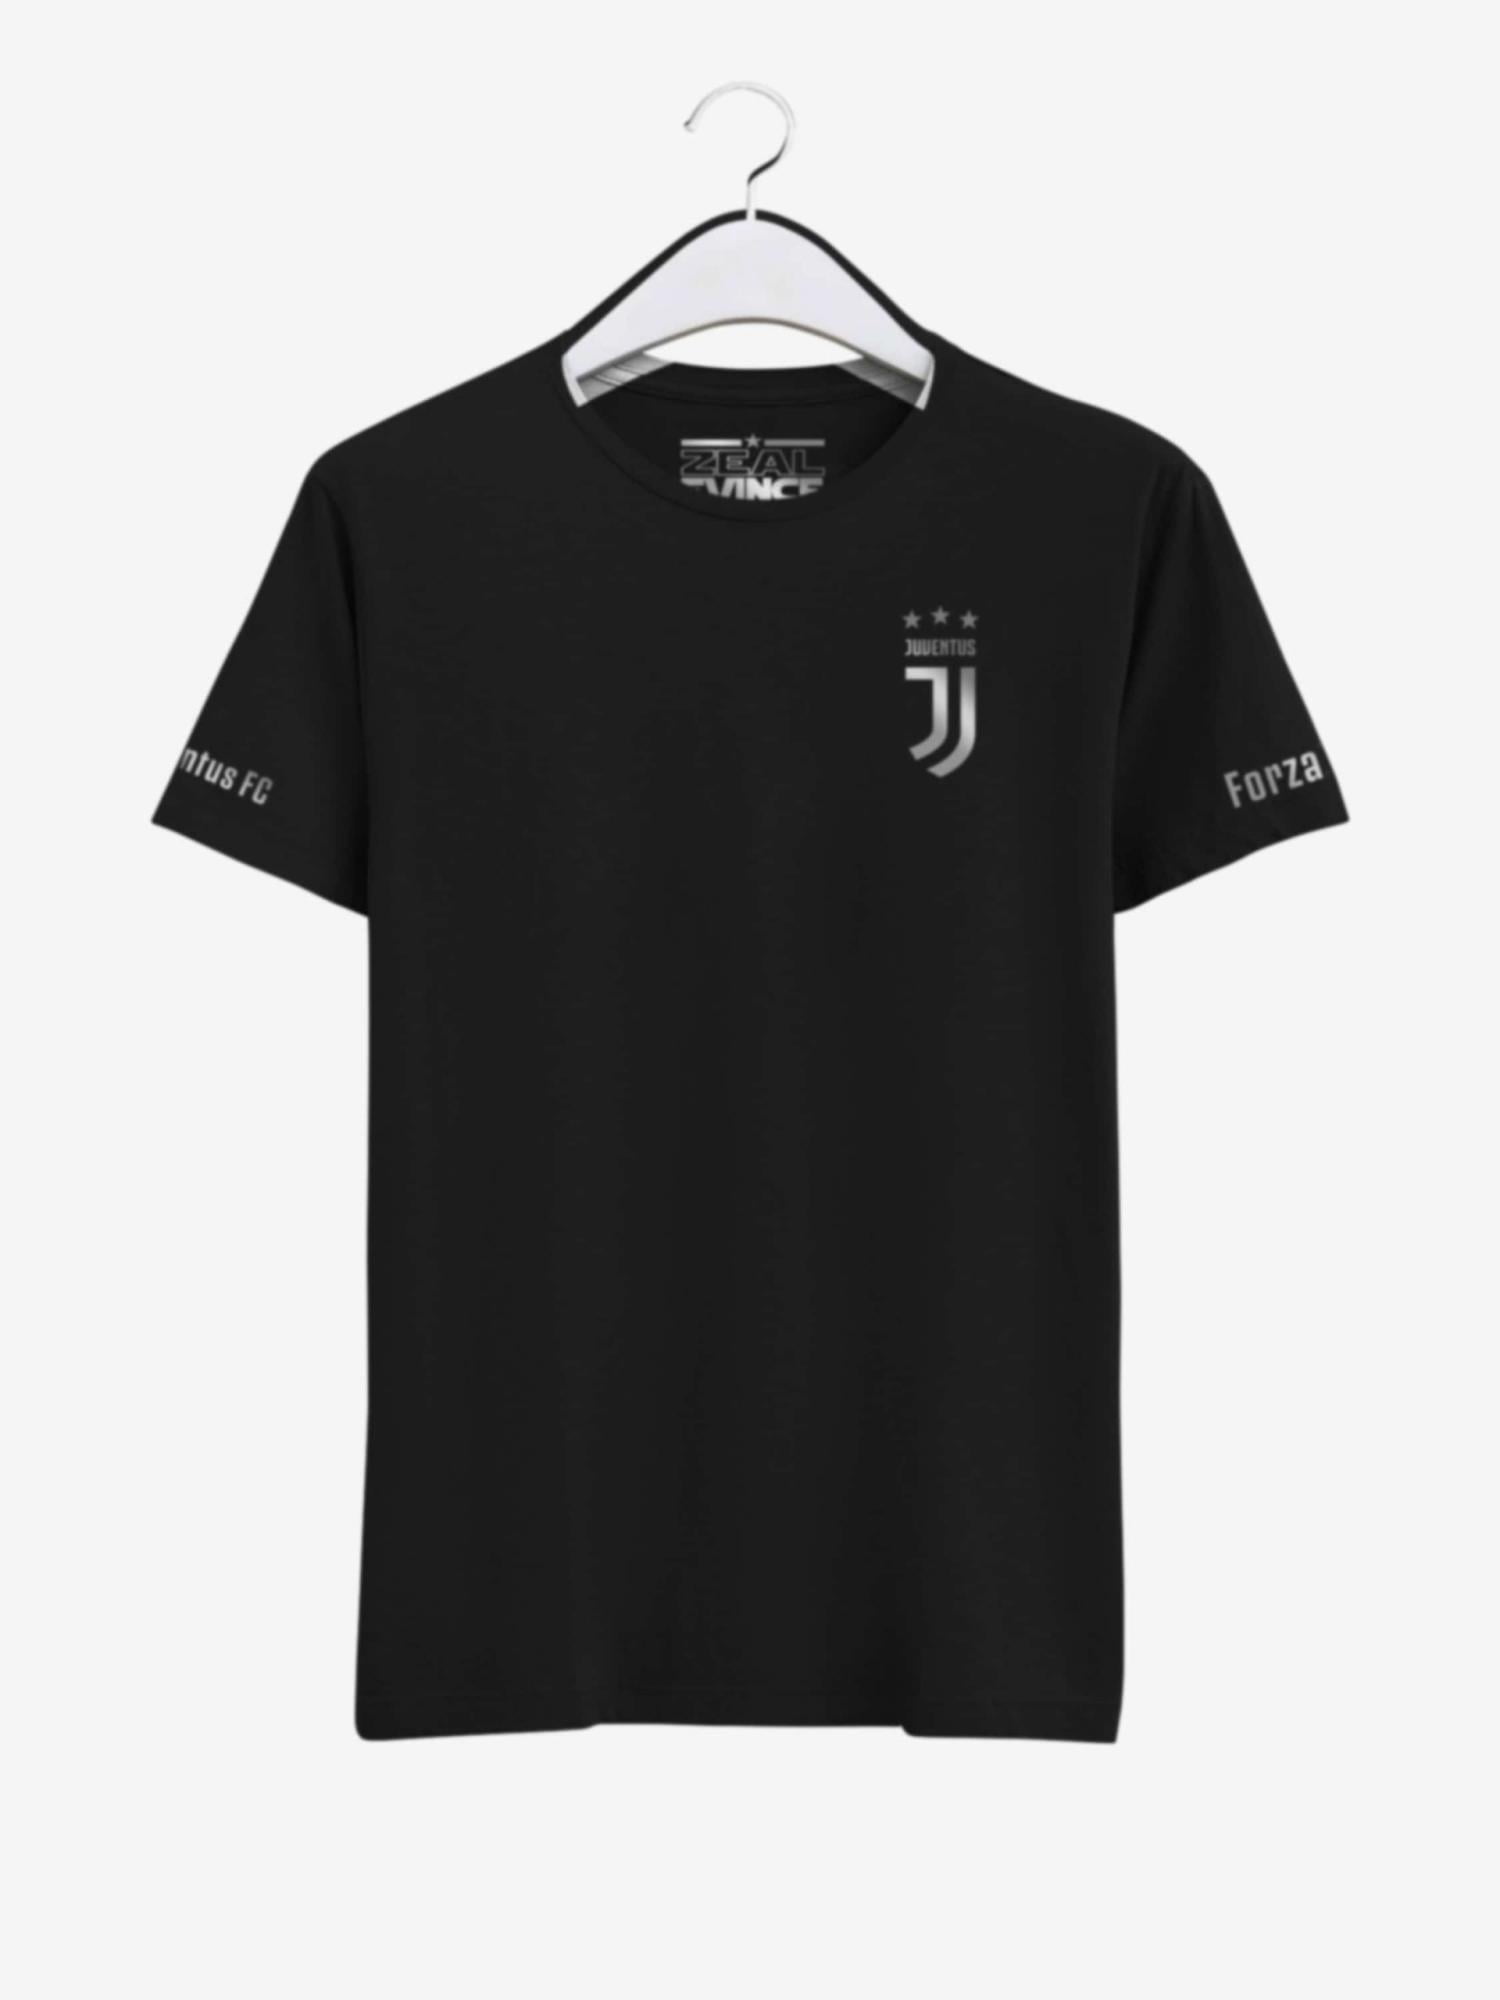 Juventus-Silver-Crest-Black-Round-Neck-T-Shirt-Front